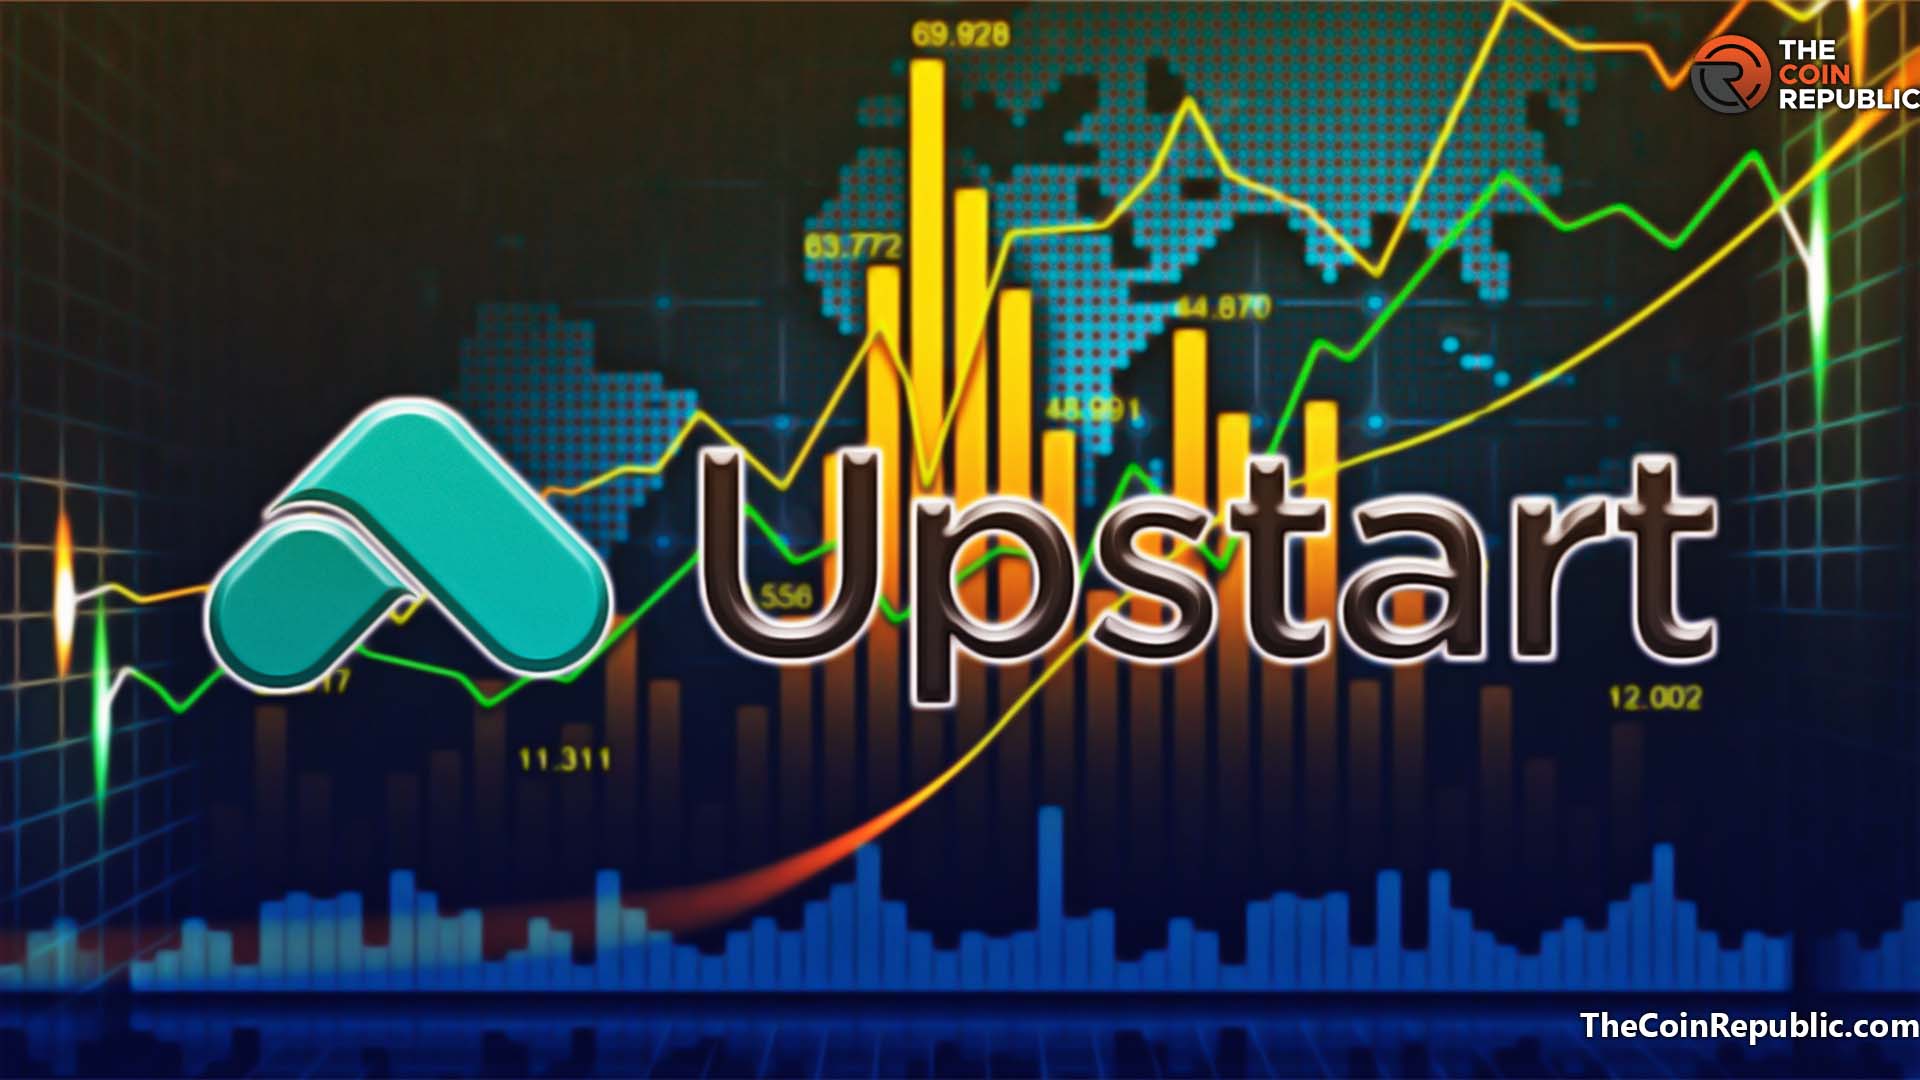 Upstart Holding (NASDAQ: UPST): Will UPST stock make $20 mark?